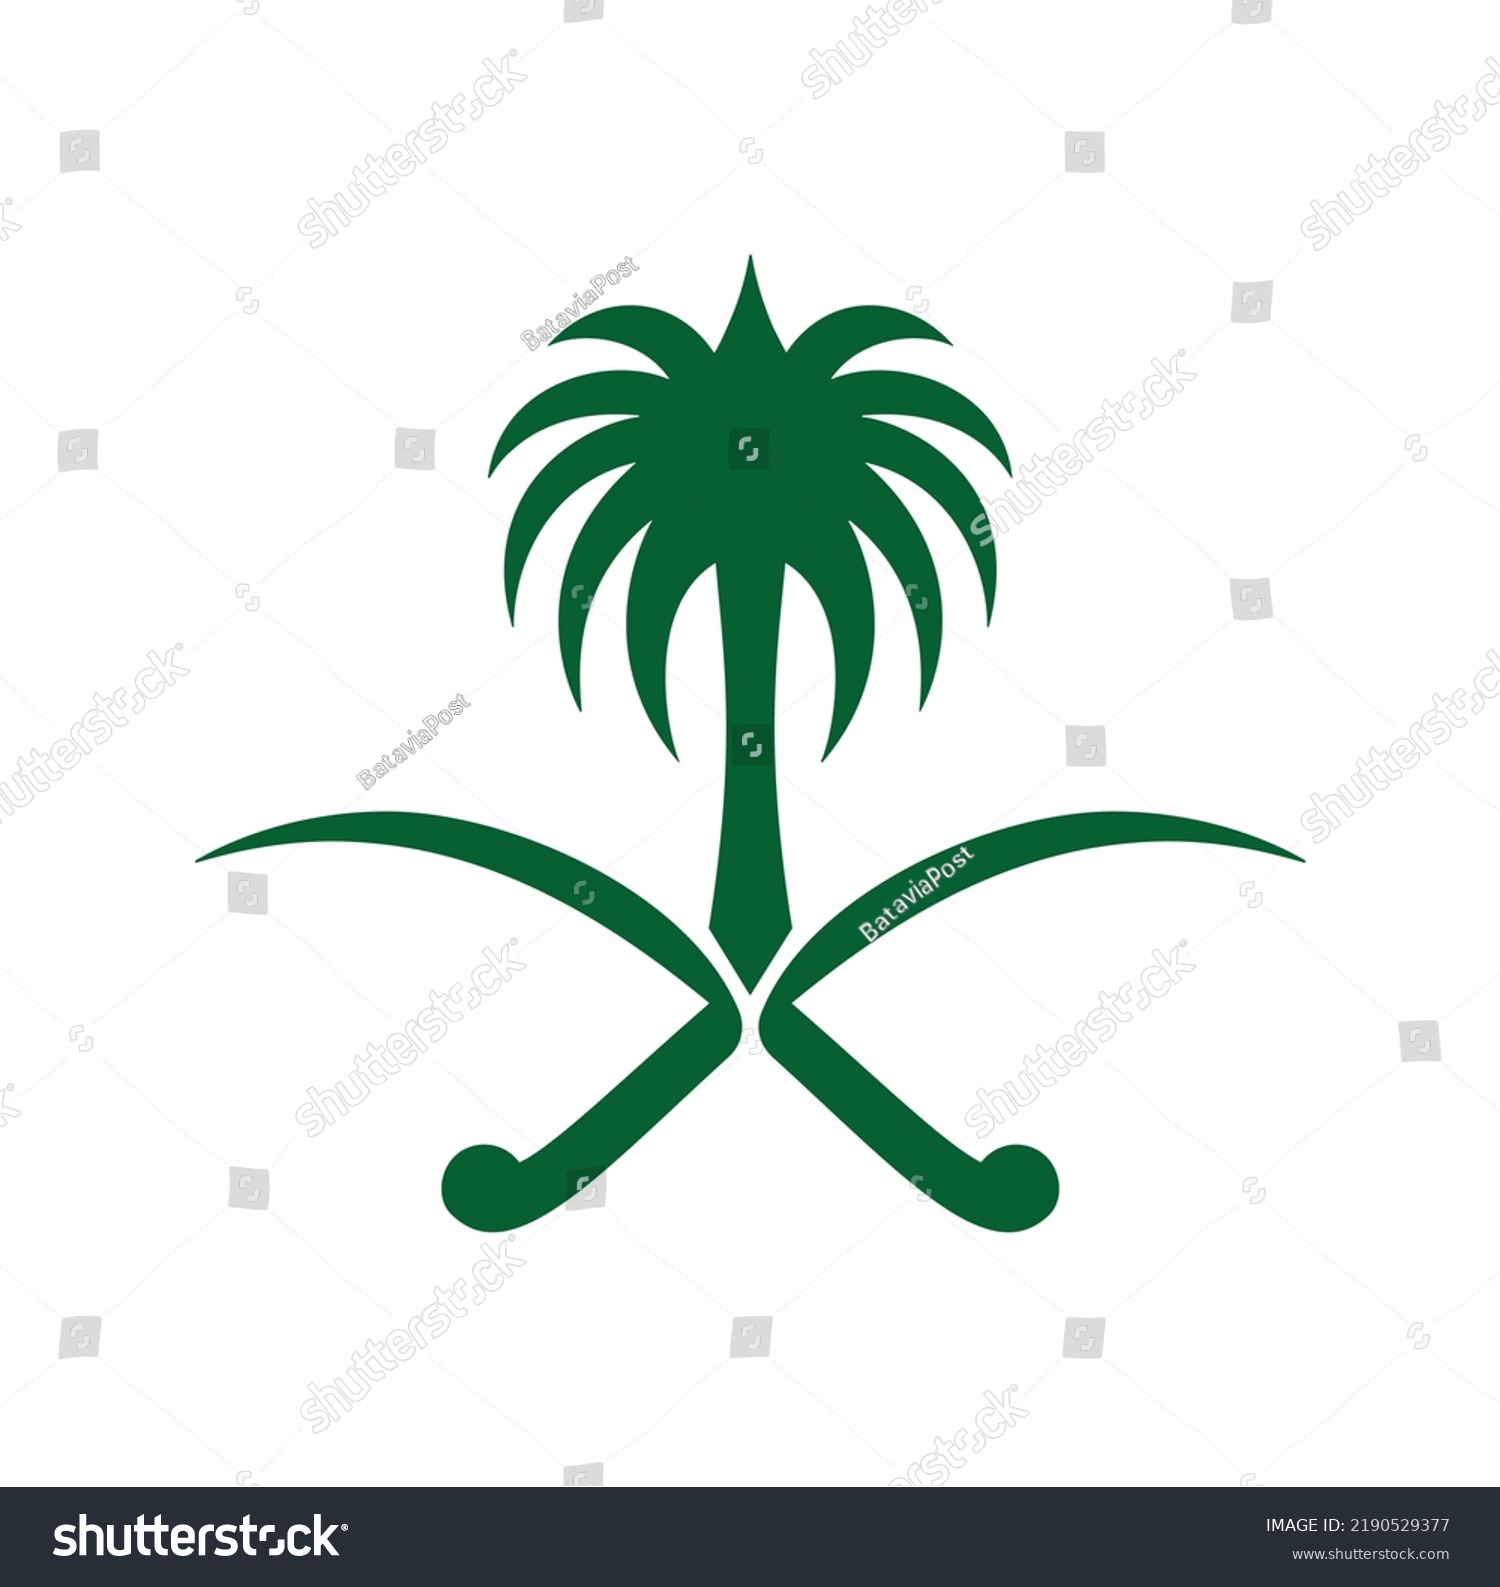 Jeddah Ksa September 22 2022 Saudi Stock Vector (Royalty Free ...